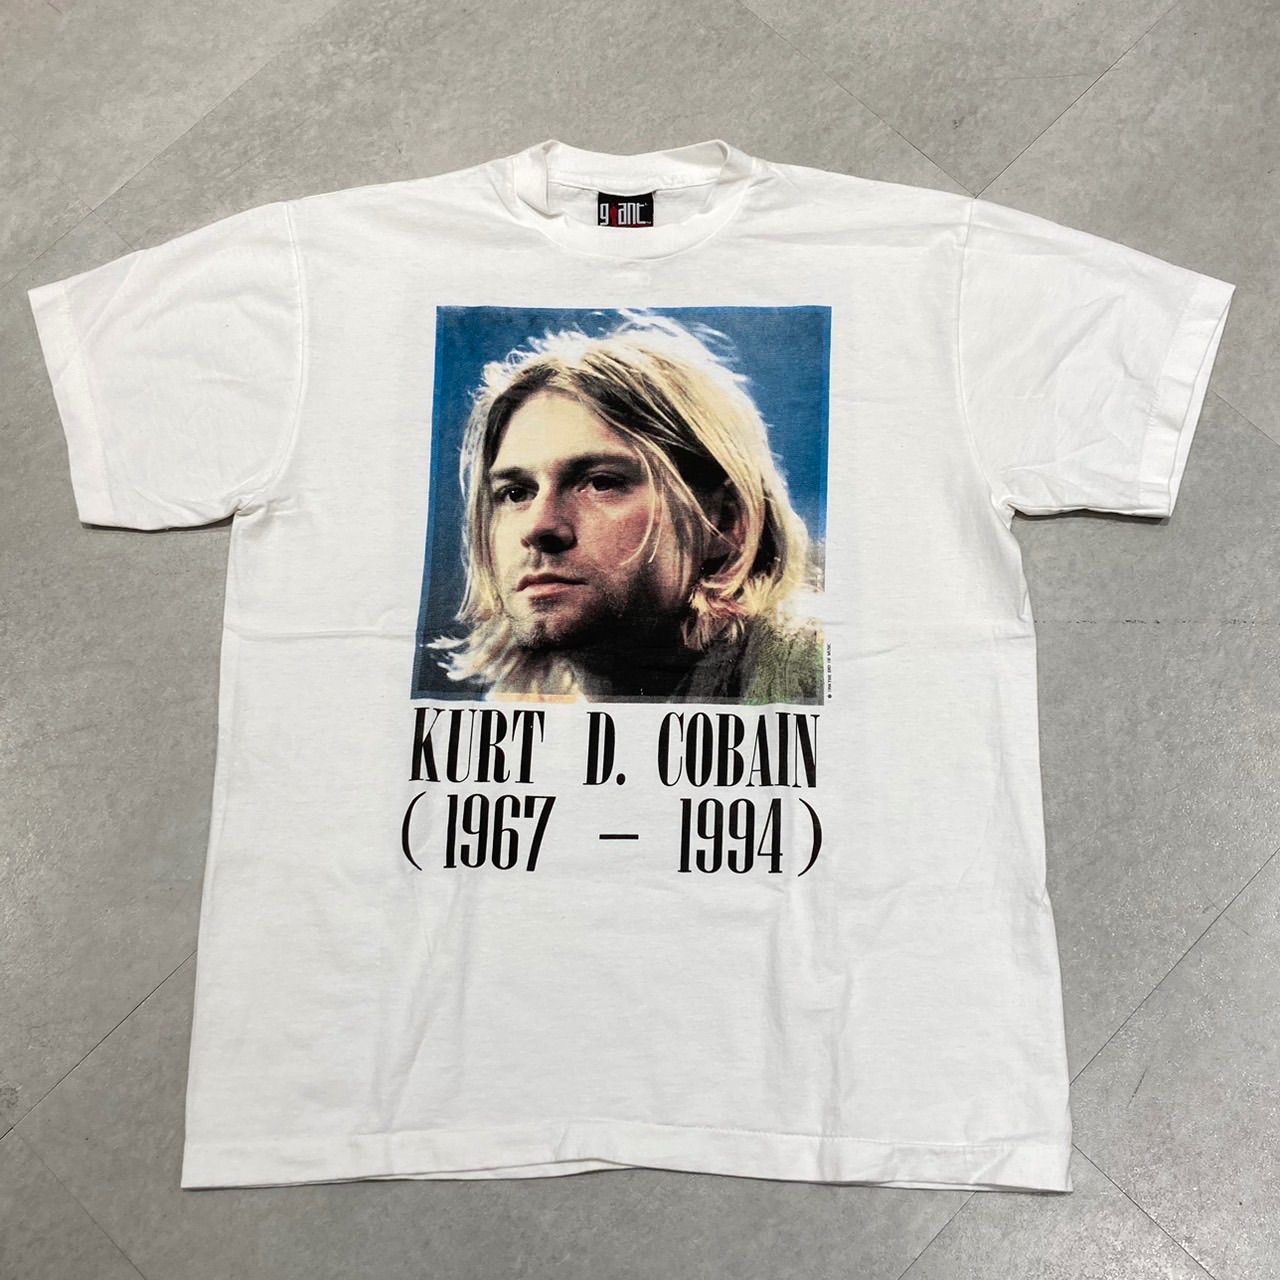 USA製 Nirvana ニルヴァーナ KURT COBAIN カートコバーン 1988 追悼 バンド Tシャツ ホワイト 白 L - メルカリ